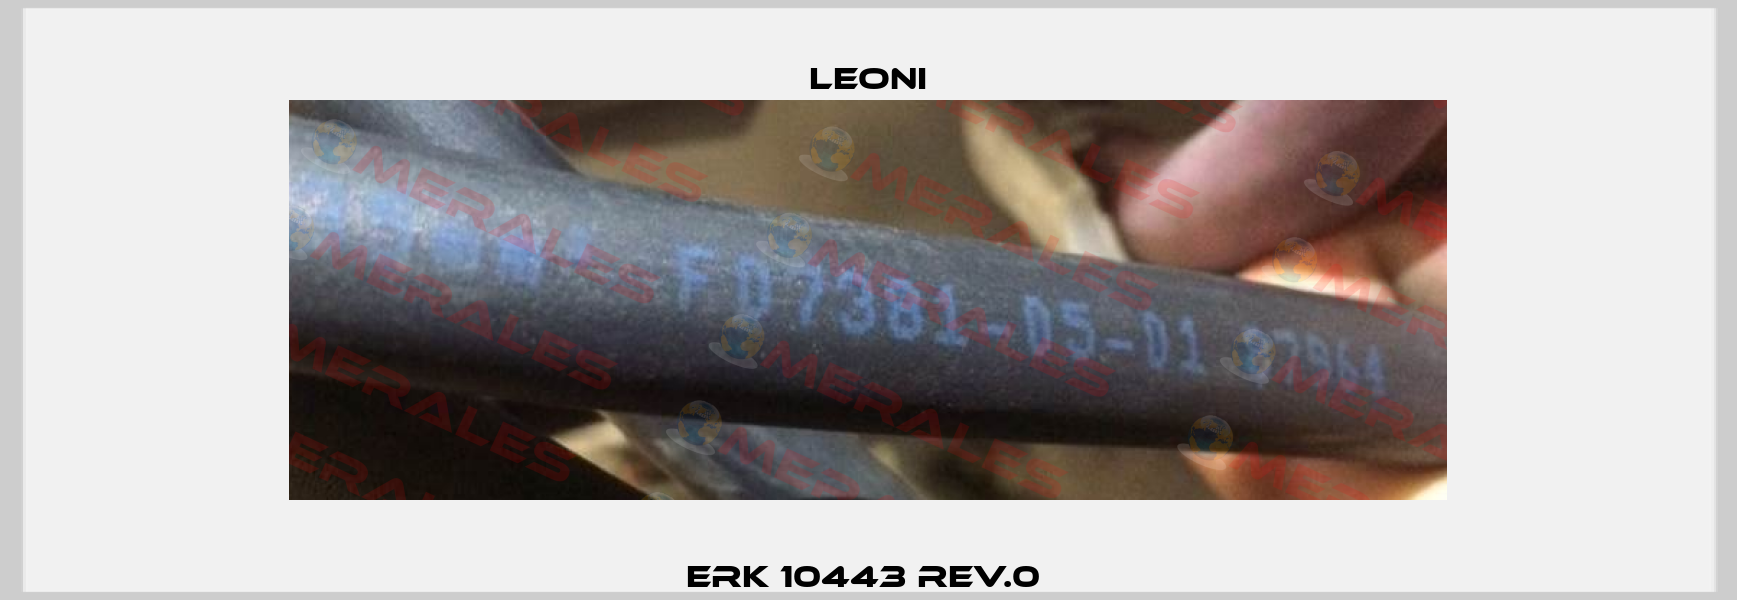 ERK 10443 REV.0  Leoni